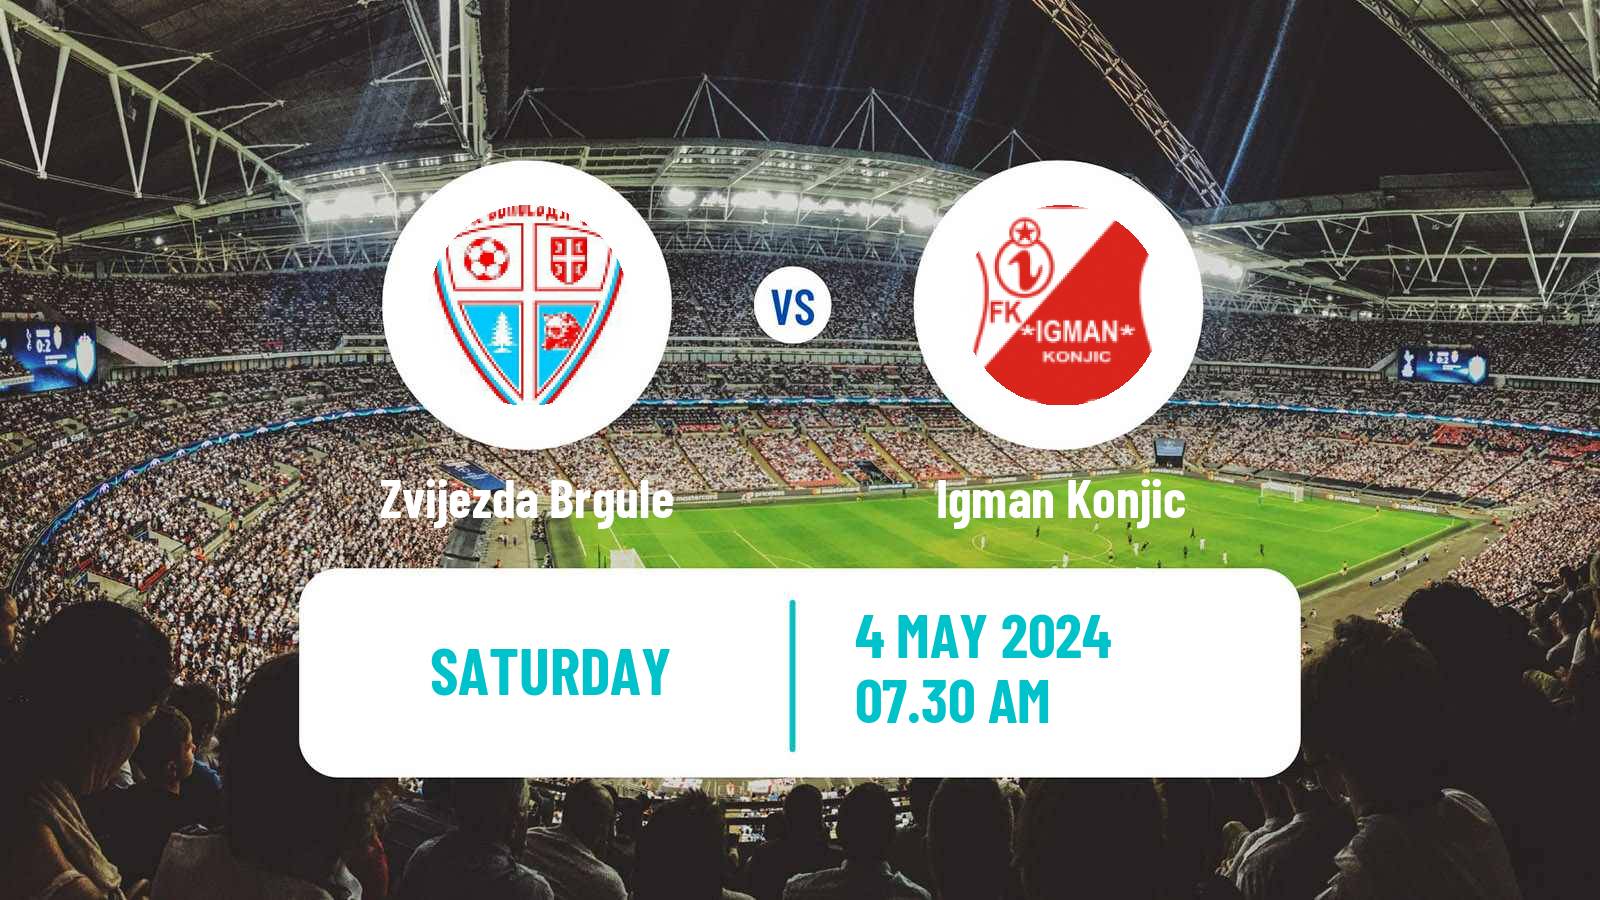 Soccer Bosnian Premier League Zvijezda Brgule - Igman Konjic